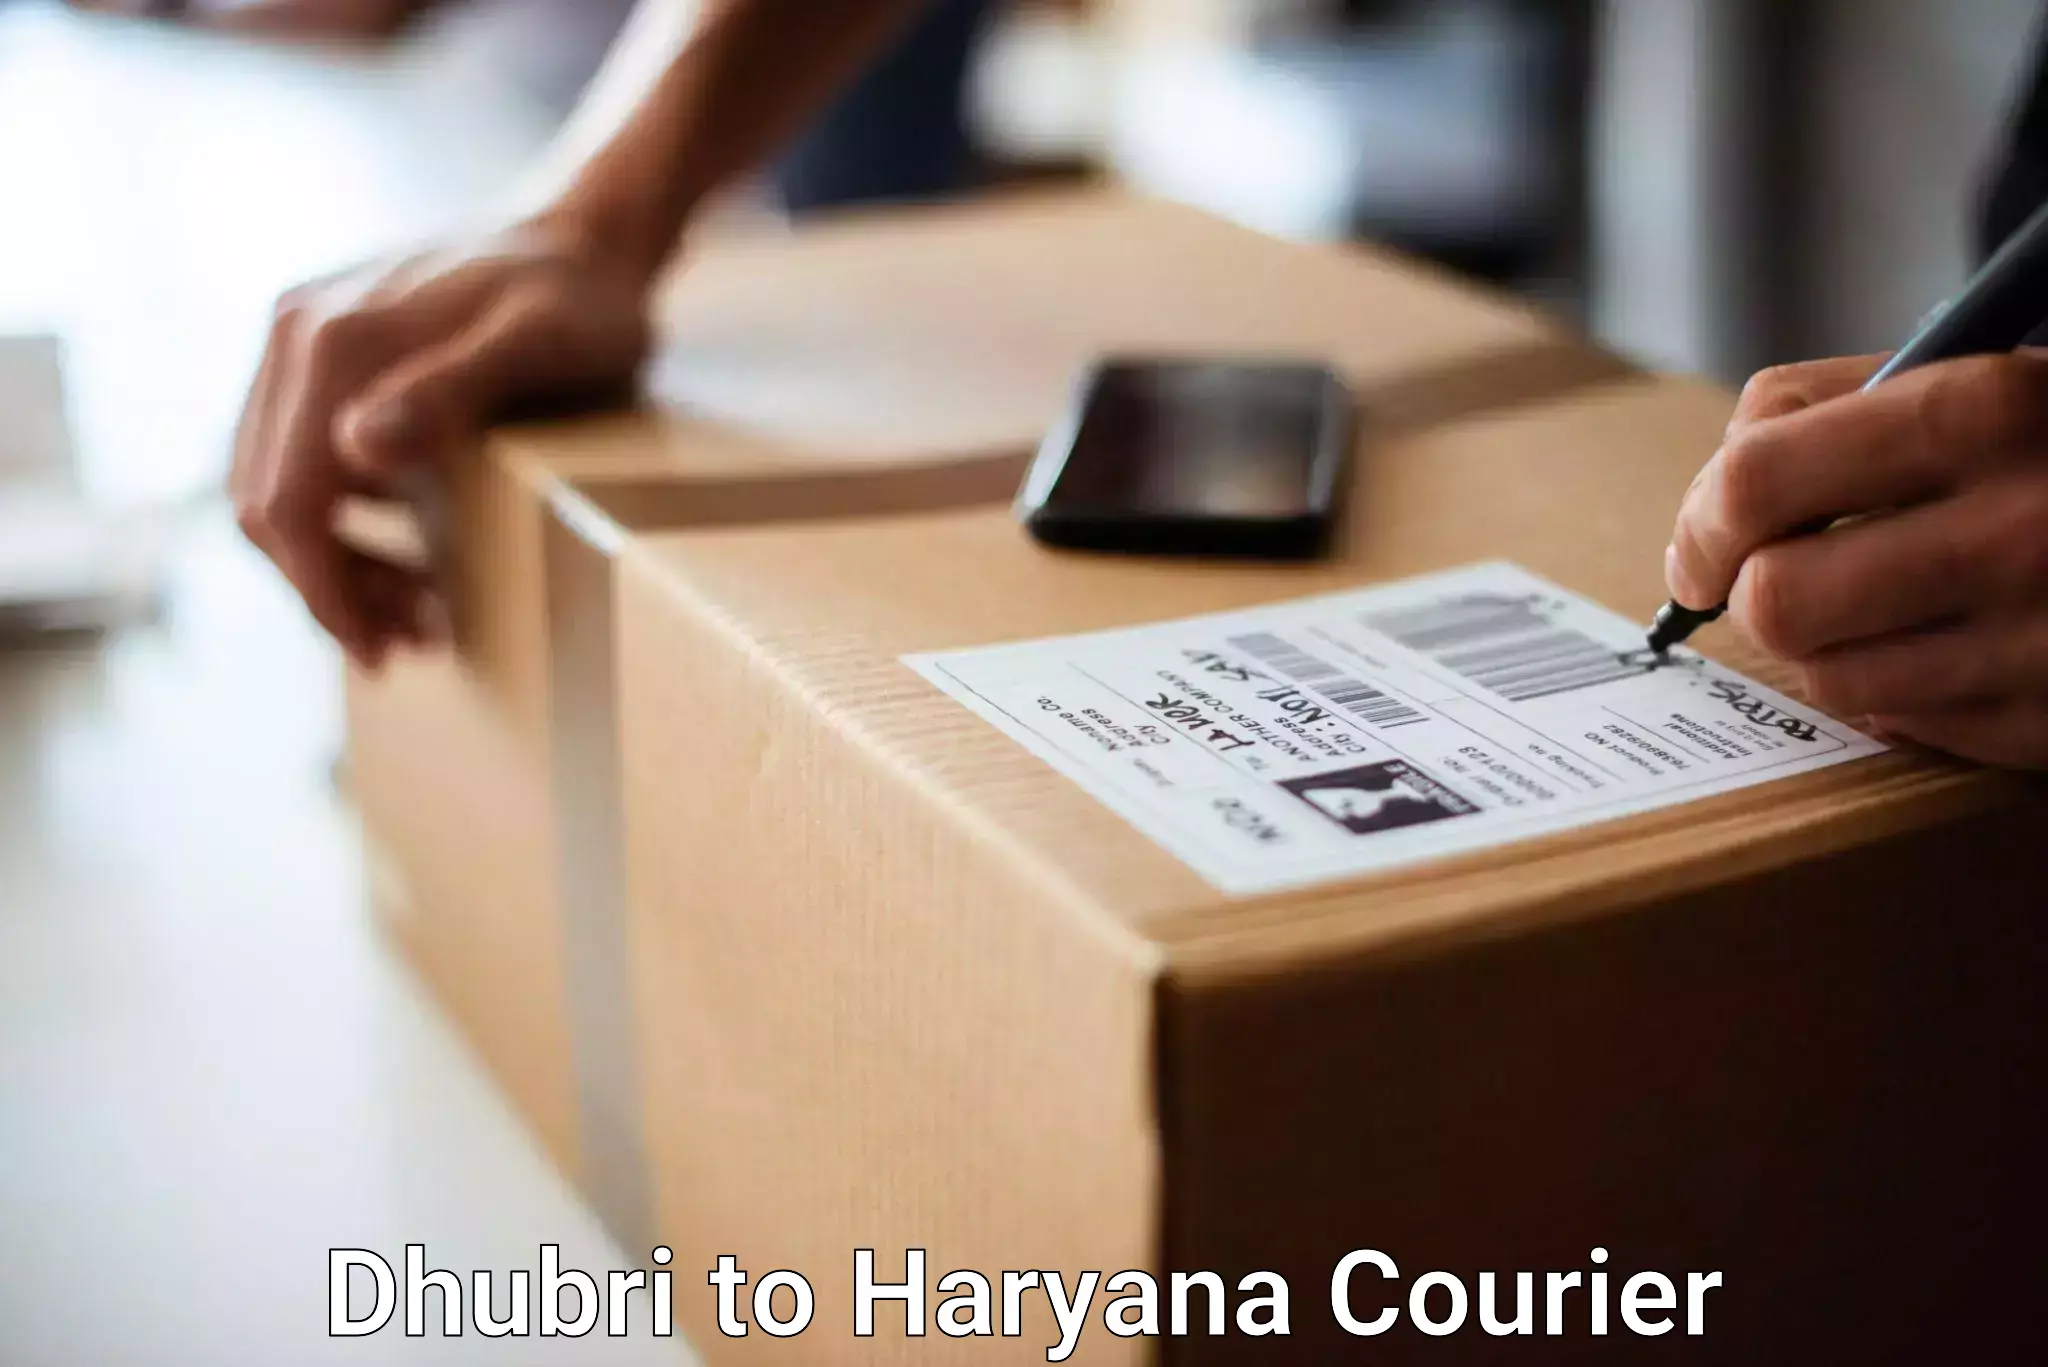 Luggage delivery app Dhubri to Loharu